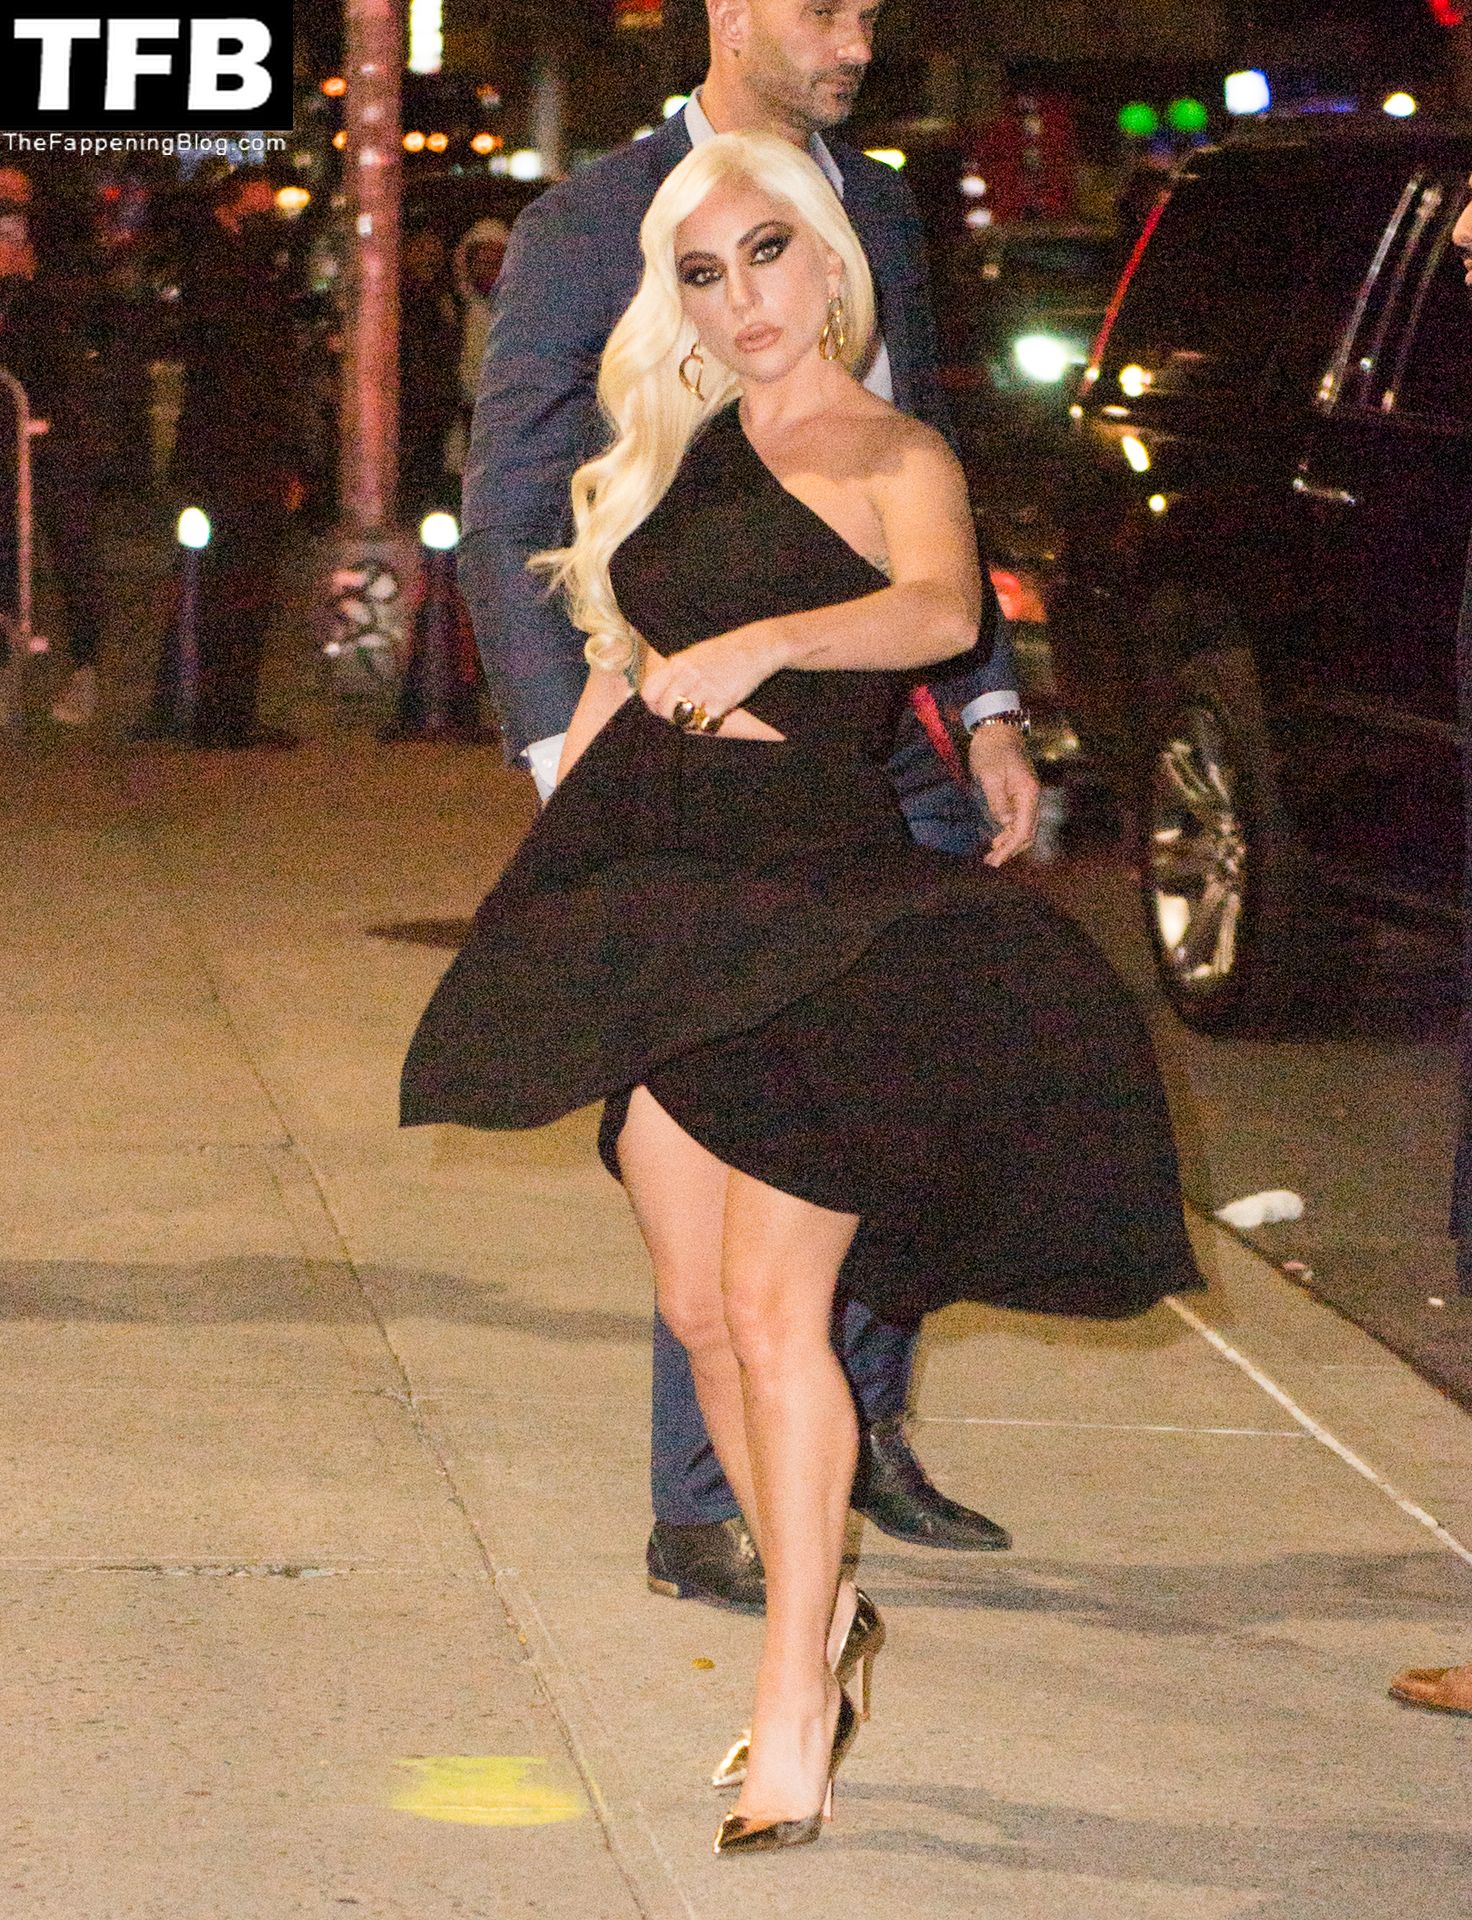 Lady-Gaga-Sexy-The-Fappening-Blog-63-1.jpg